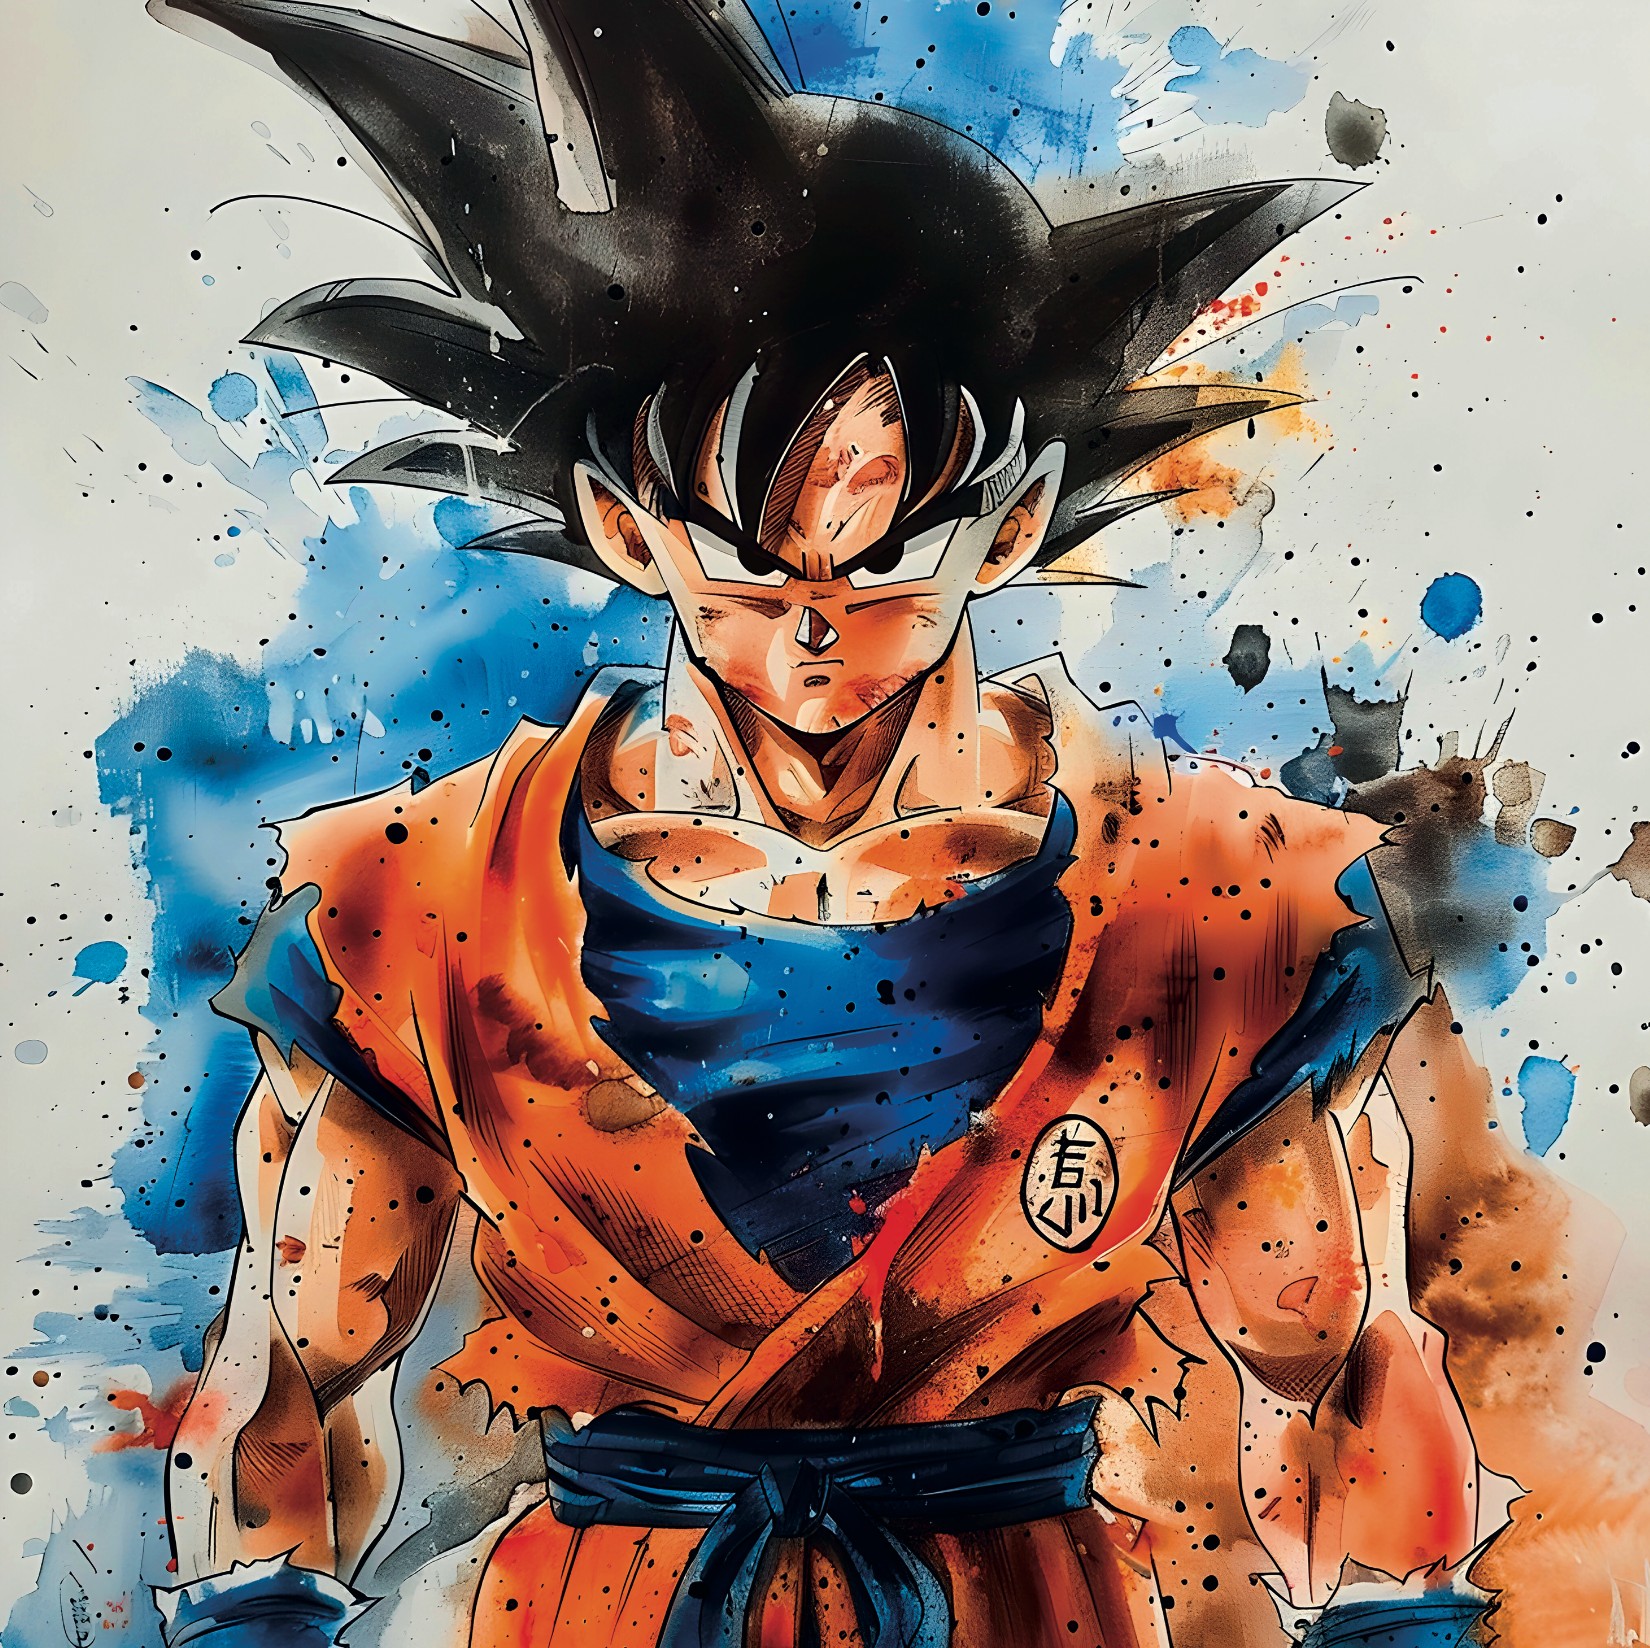 Tableau Dragon Ball Z - Goku en Mouvement - Décoration Murale Vibrante - Fabulartz.fr 